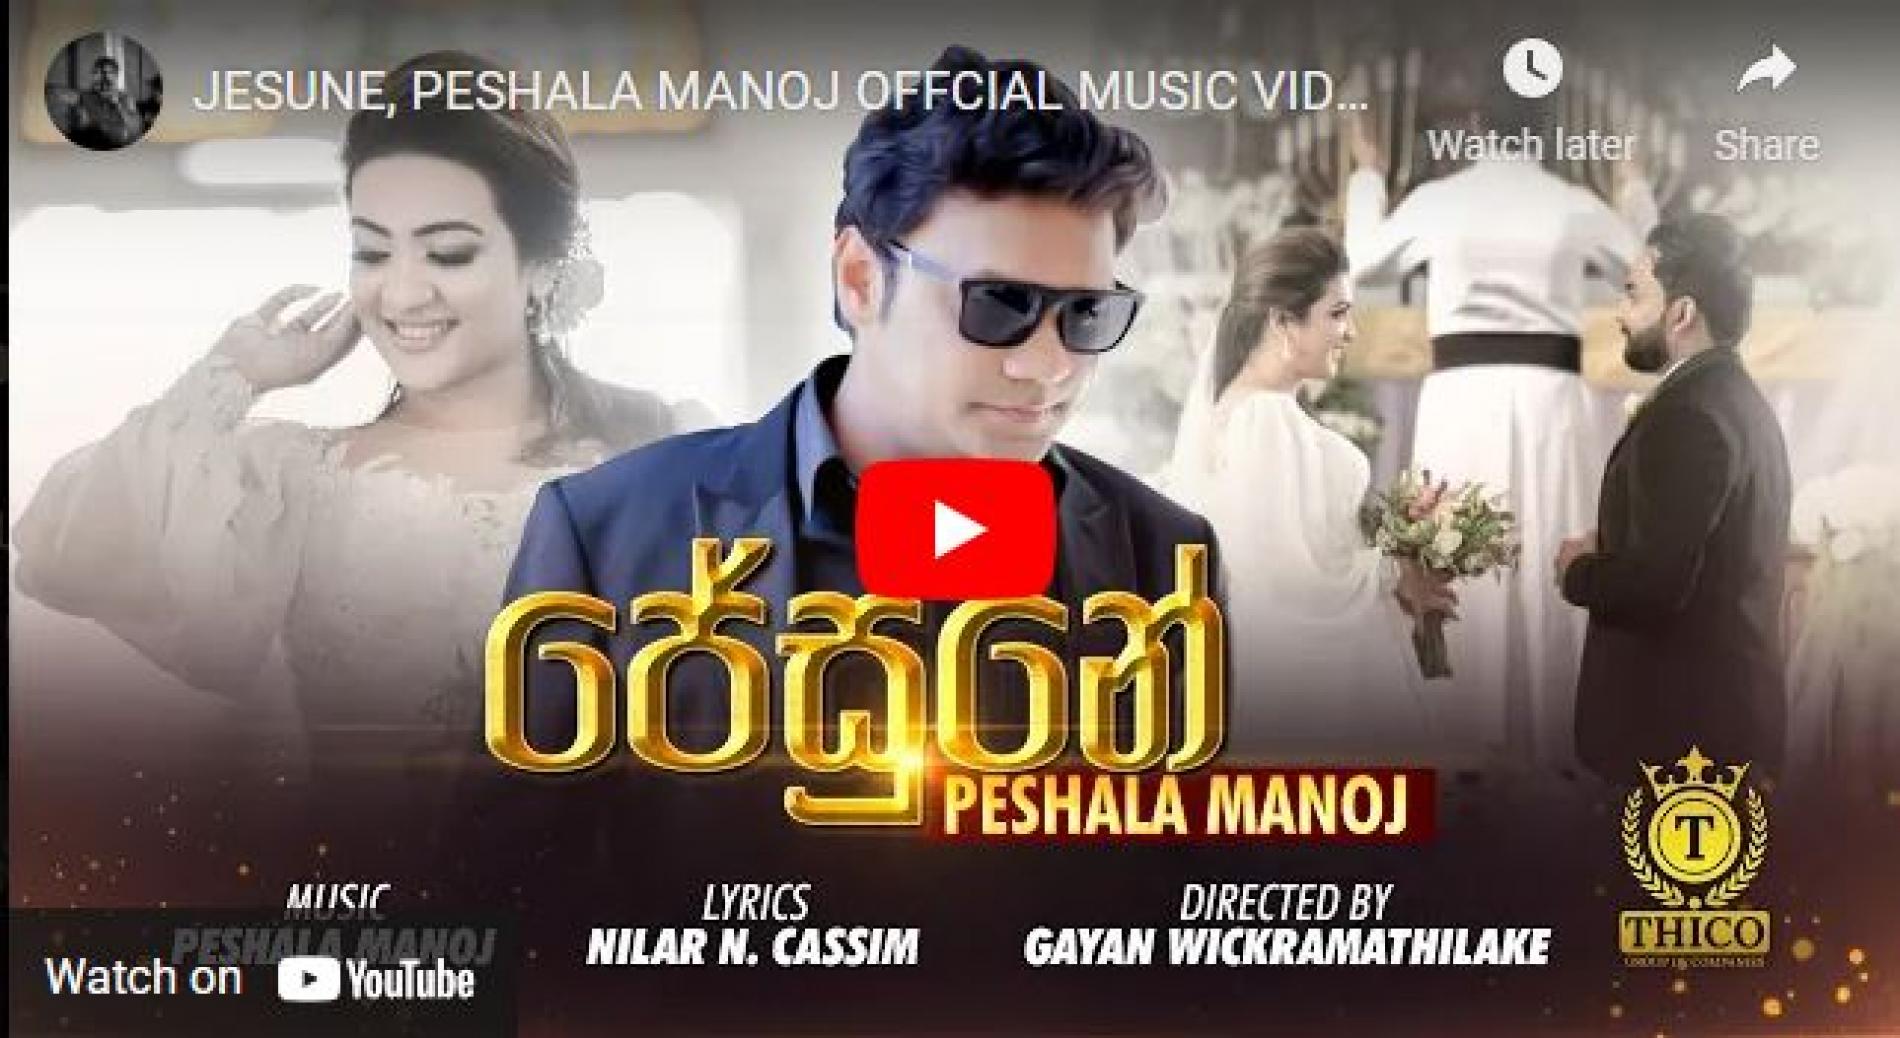 New Music : Jesune, Peshala Manoj Official Music Video